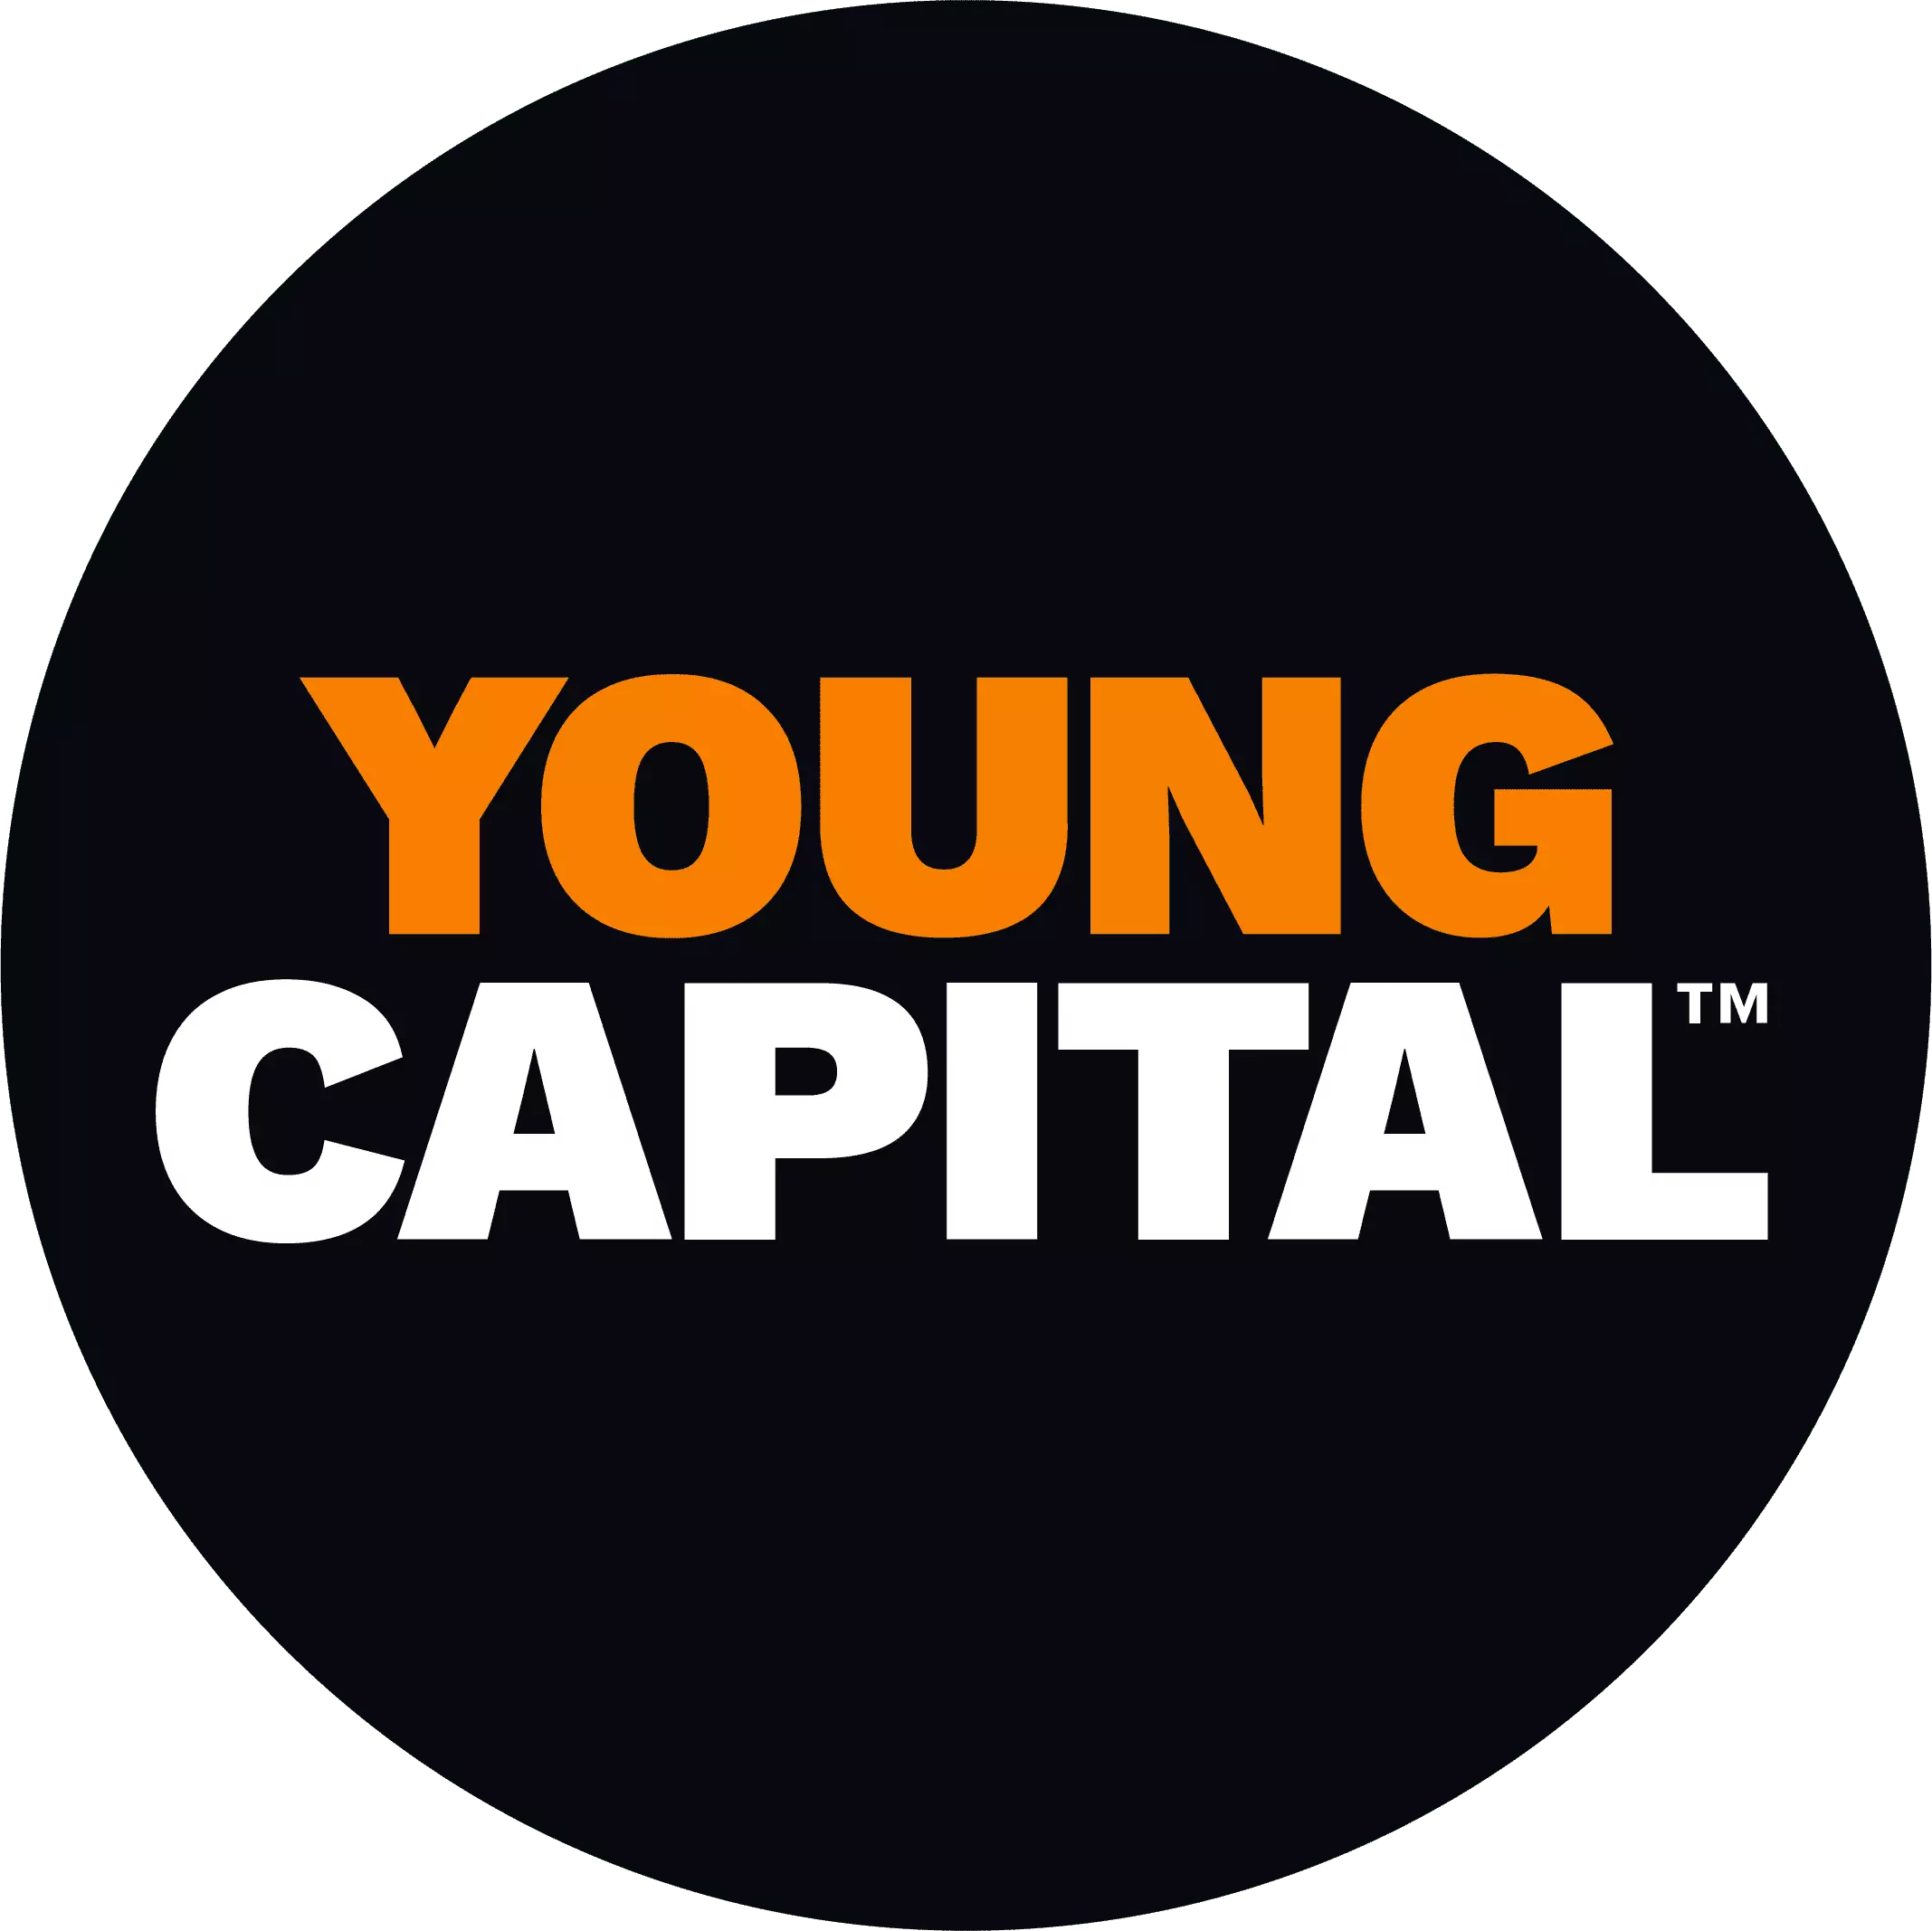 youngcapital Logo